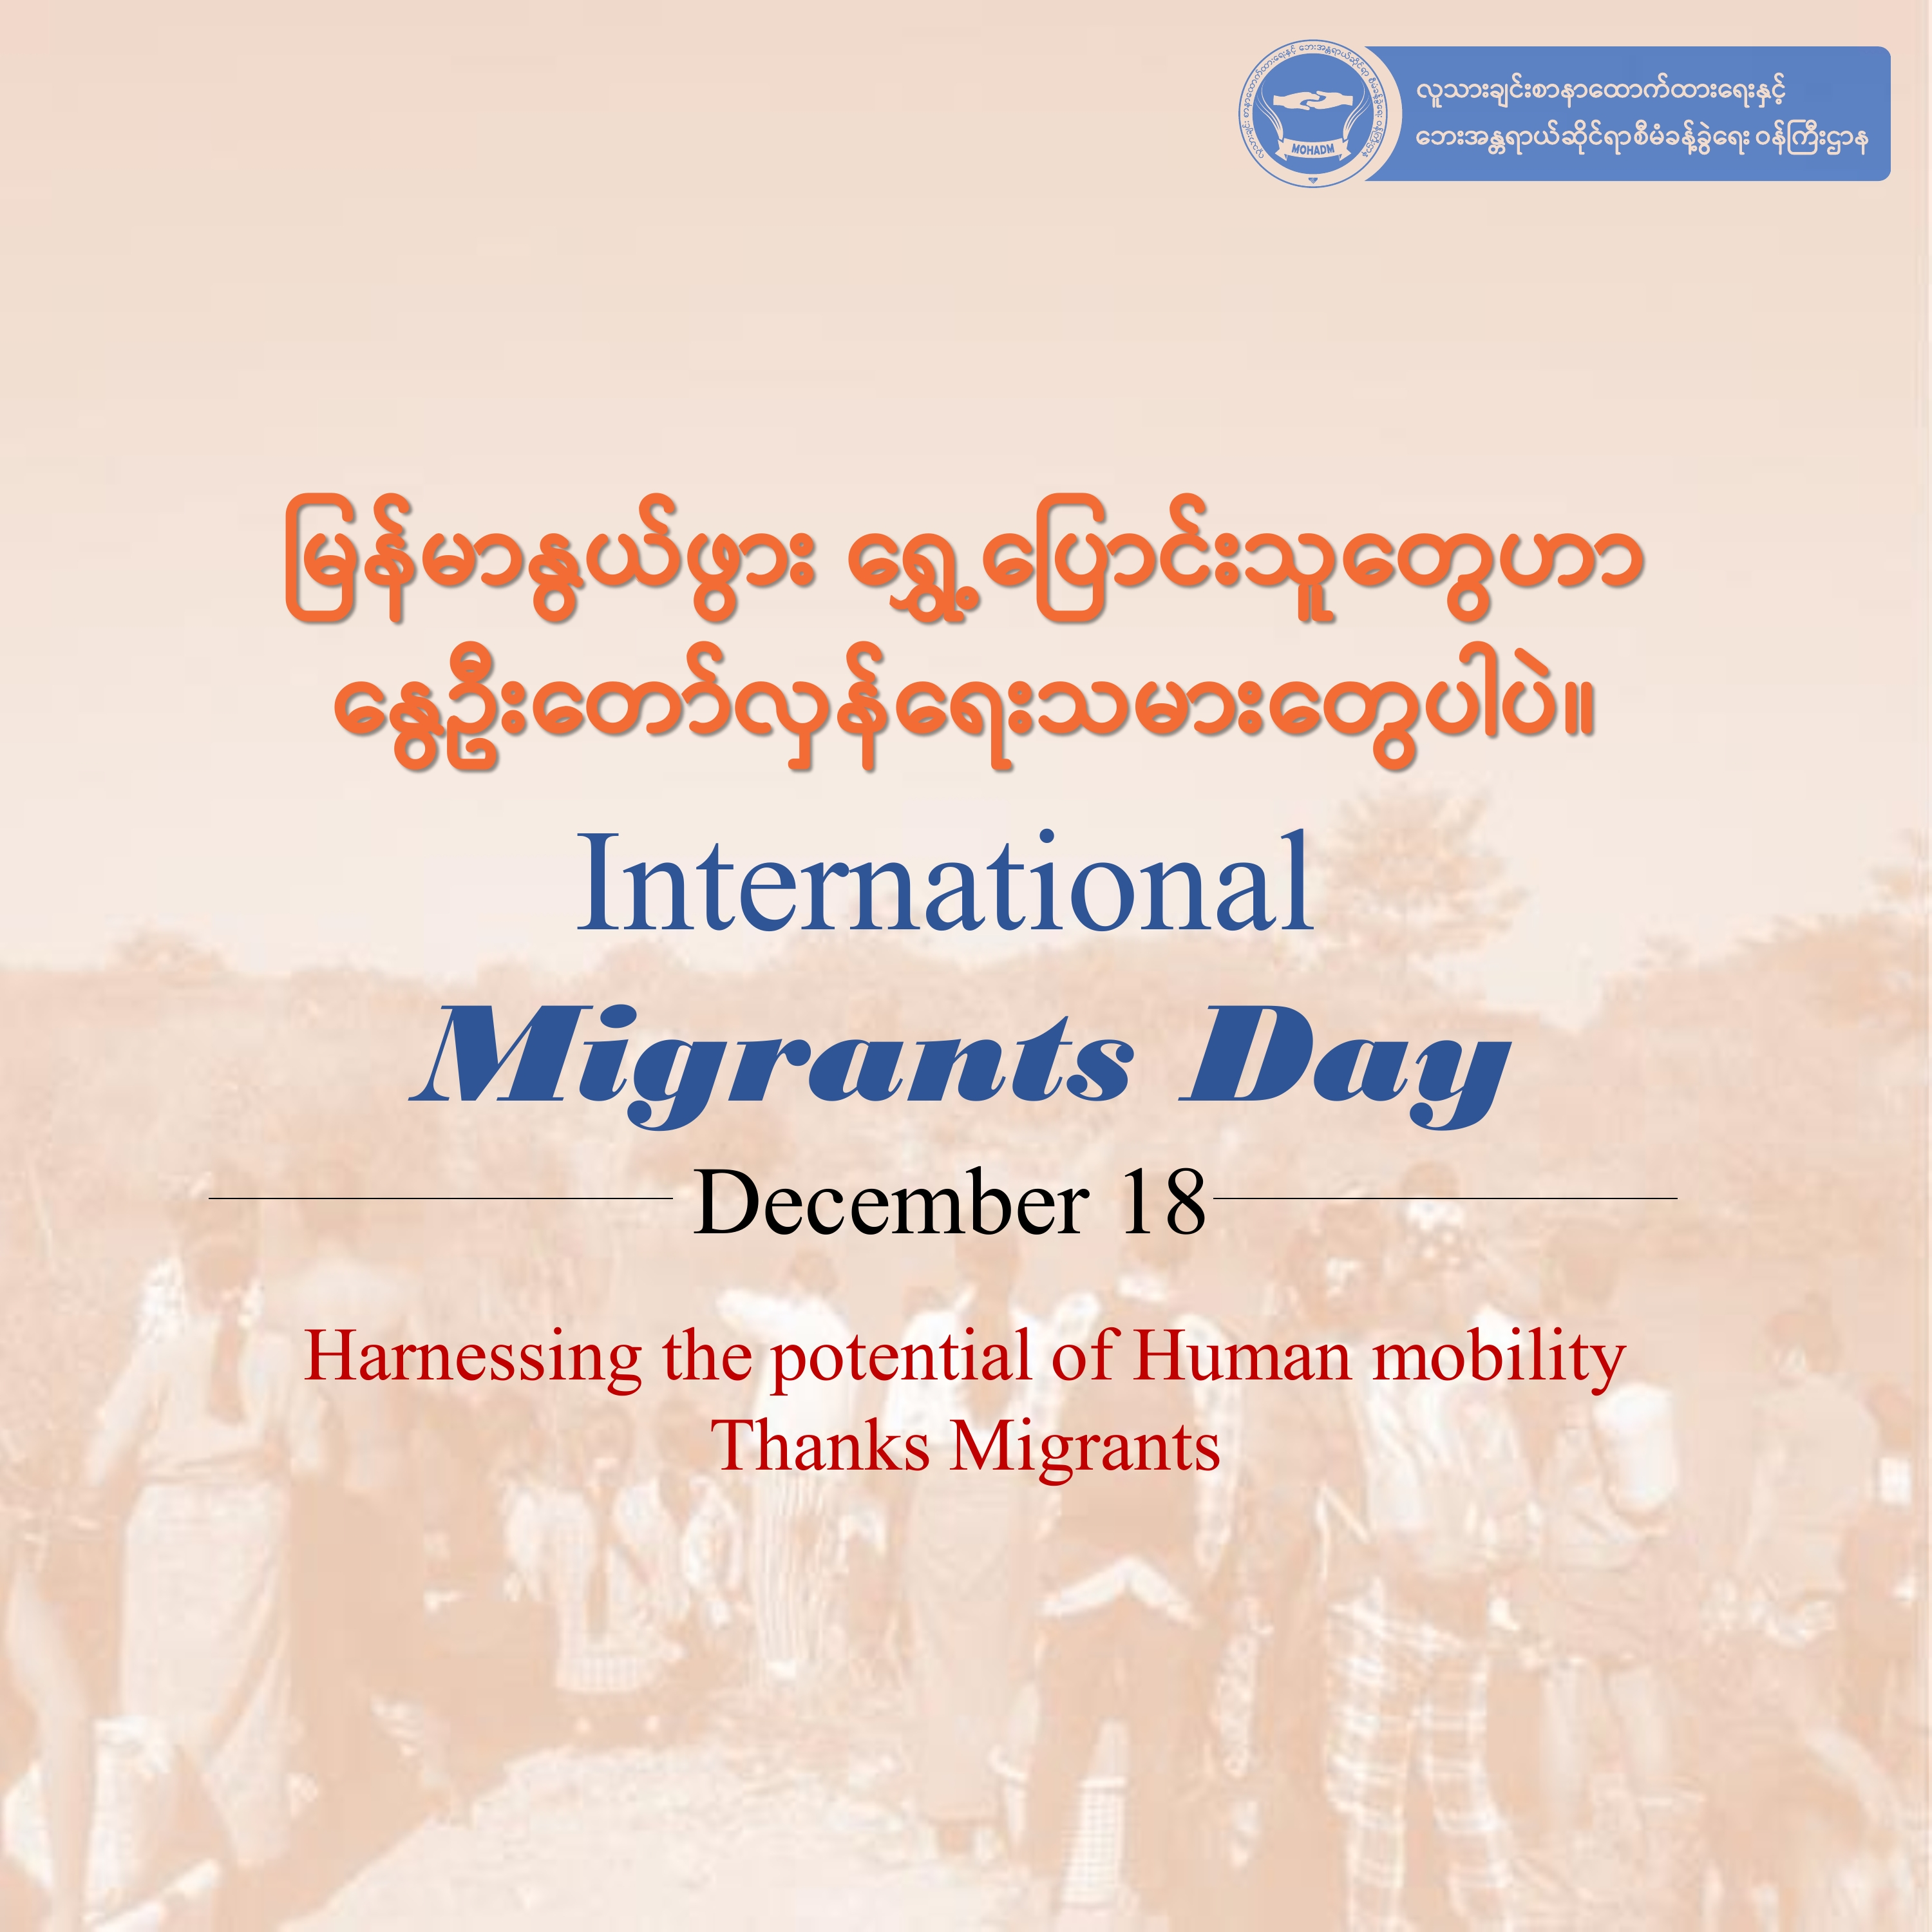 International Migrants Day (December 18)